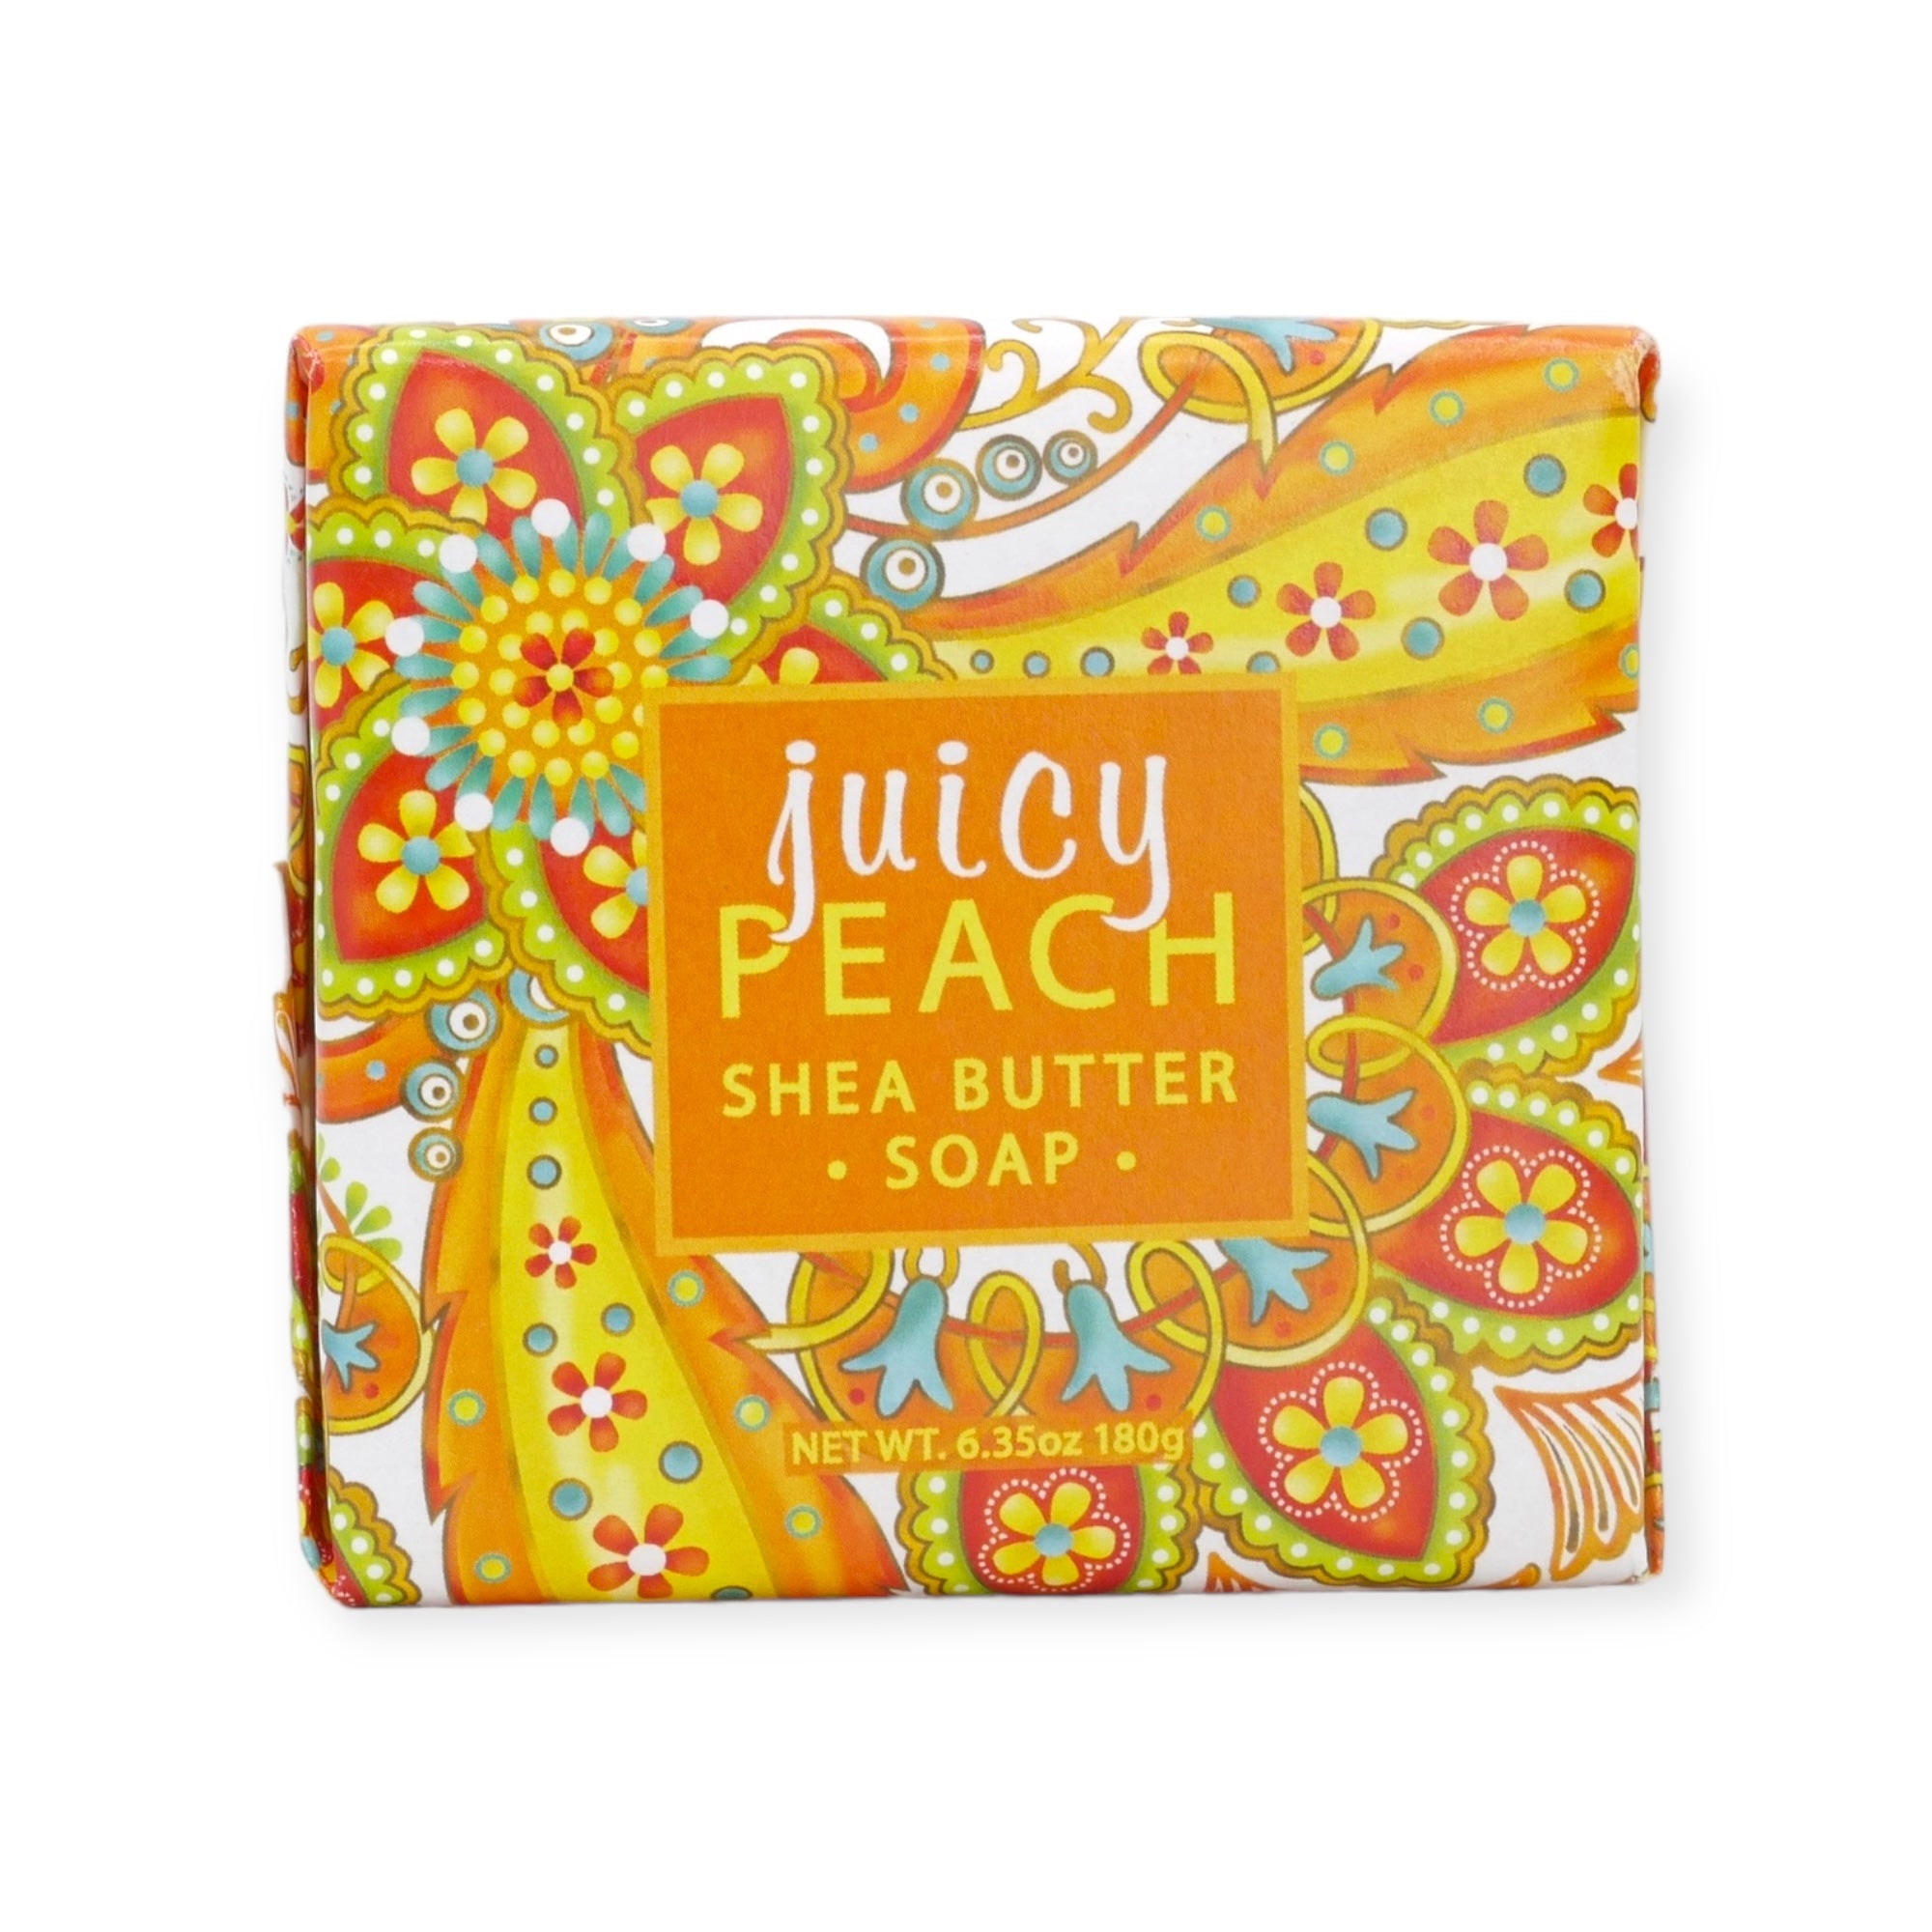 Juicy Peach Shea Butter Spa Soap by Greenwich Bay Trading Co.